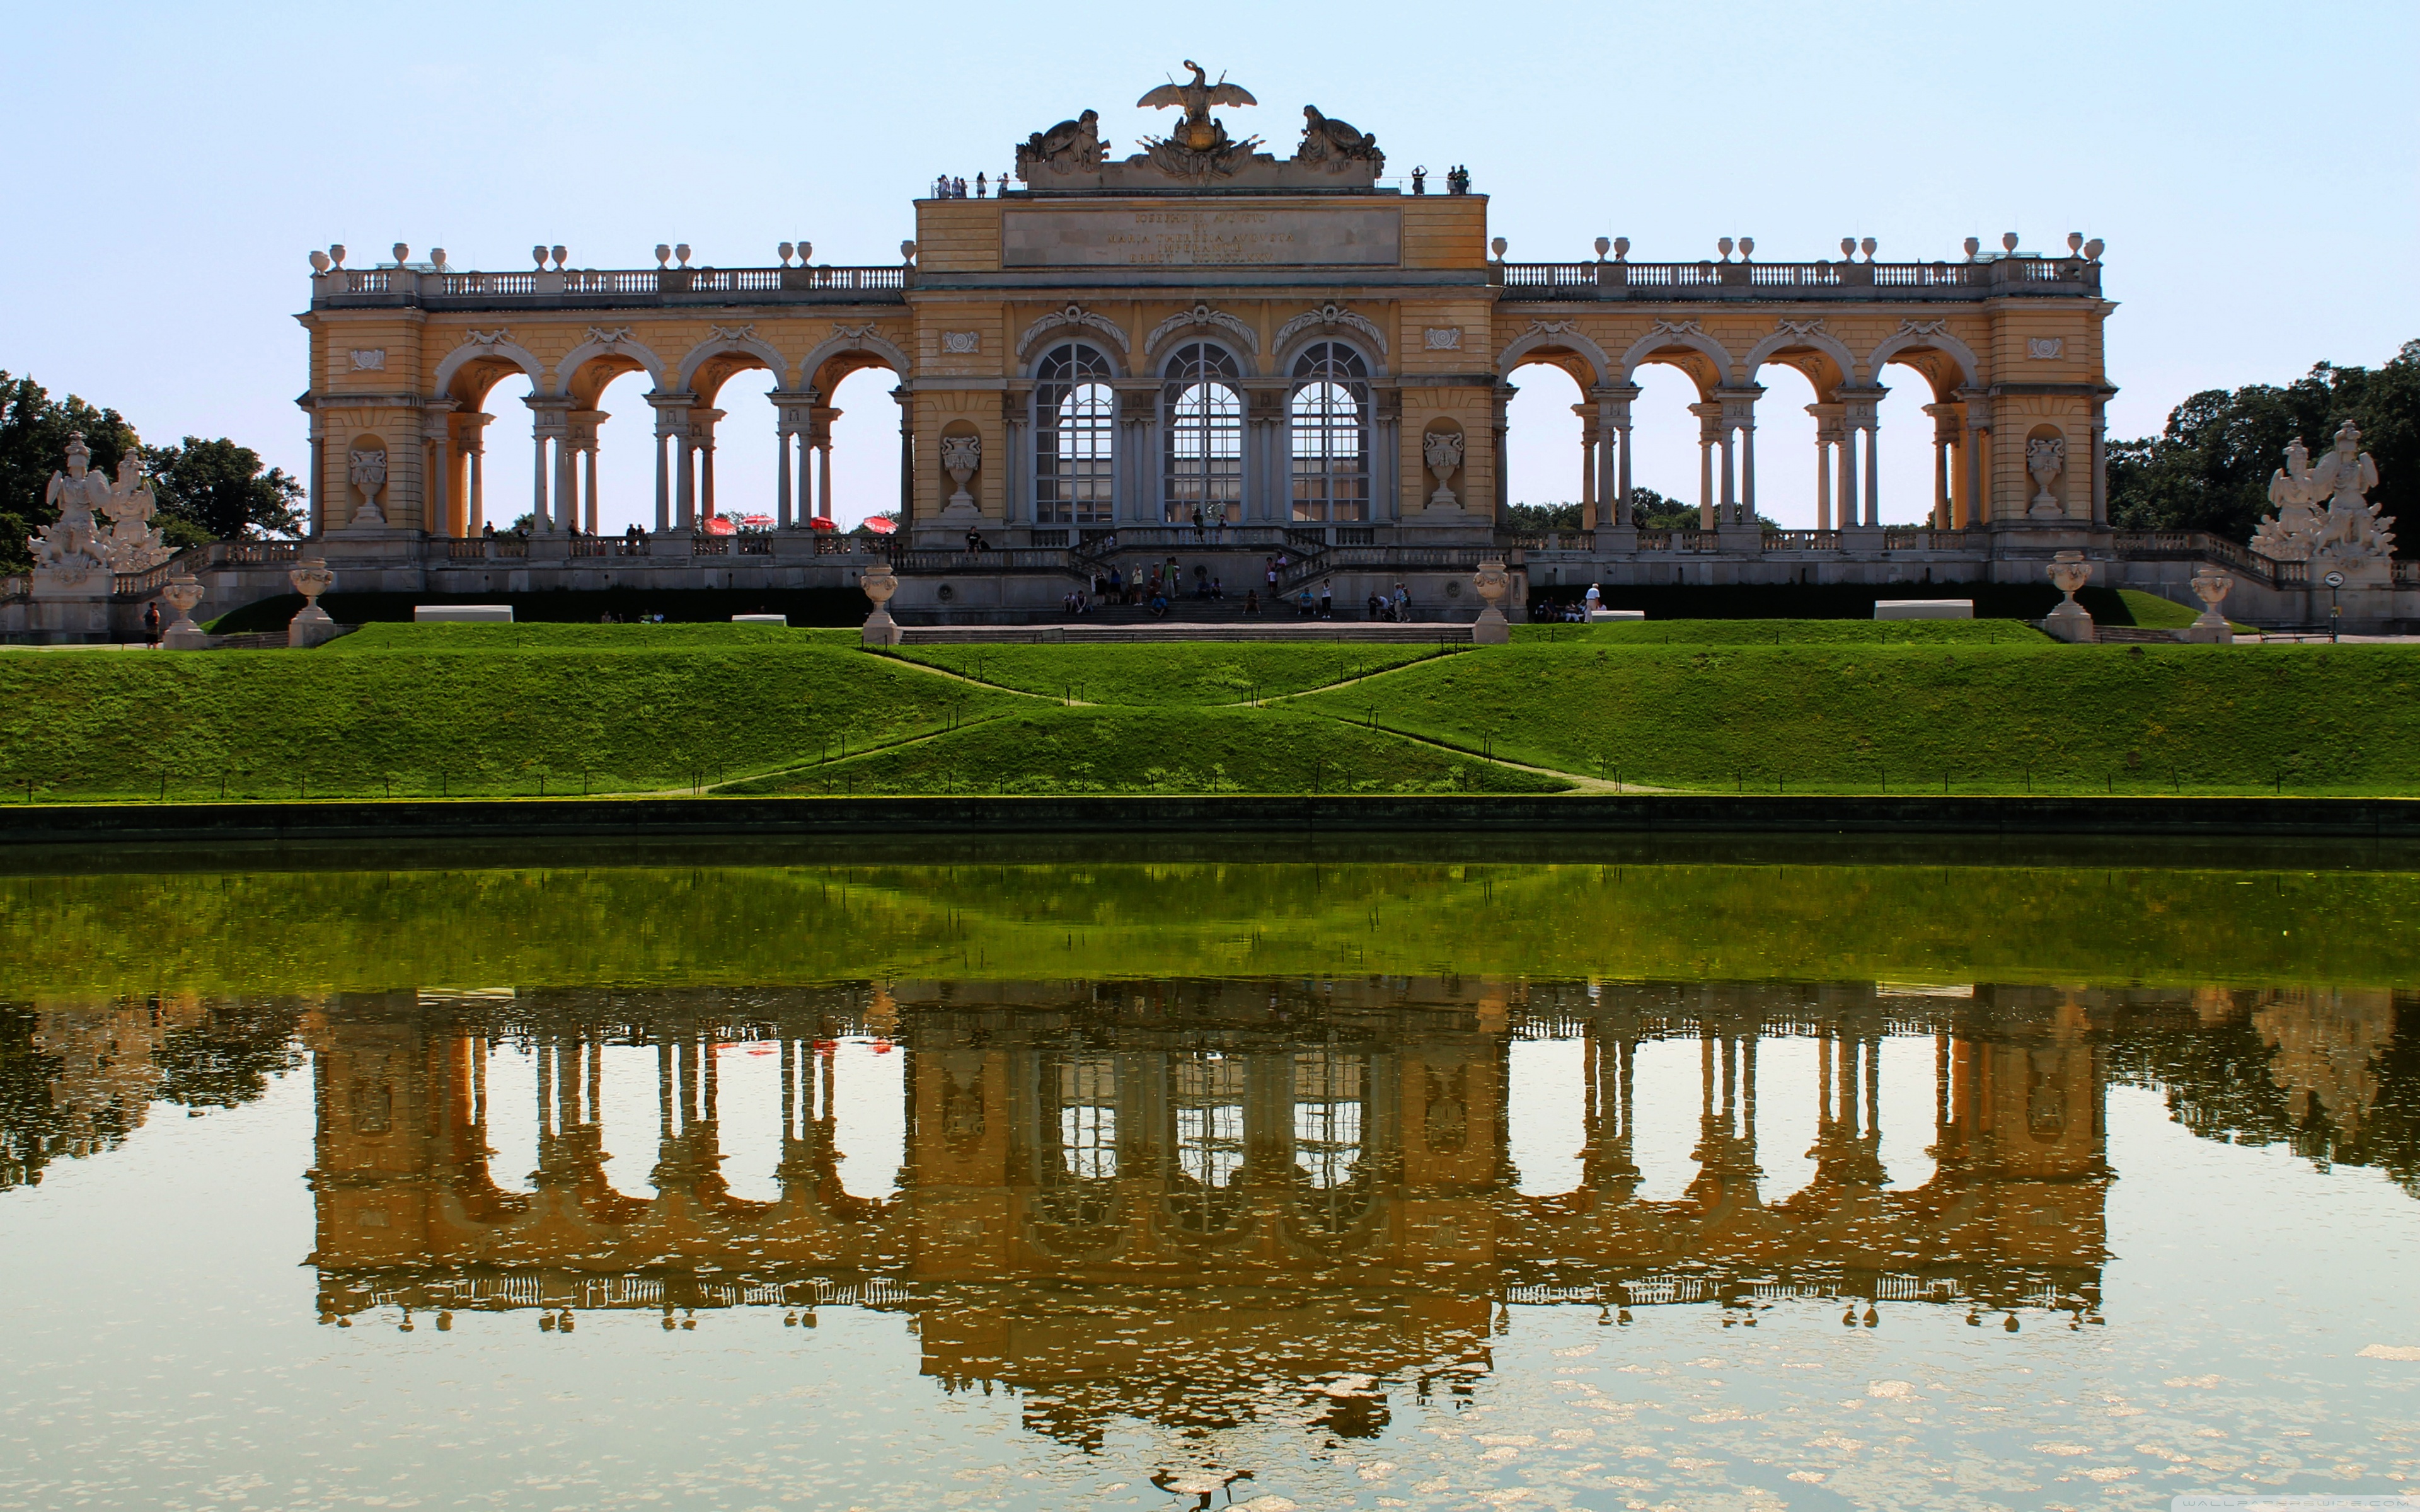 Schonbrunn Palace, Vienna, Austria 640x960 iPhone 4/4S wallpaper,  background, picture, image